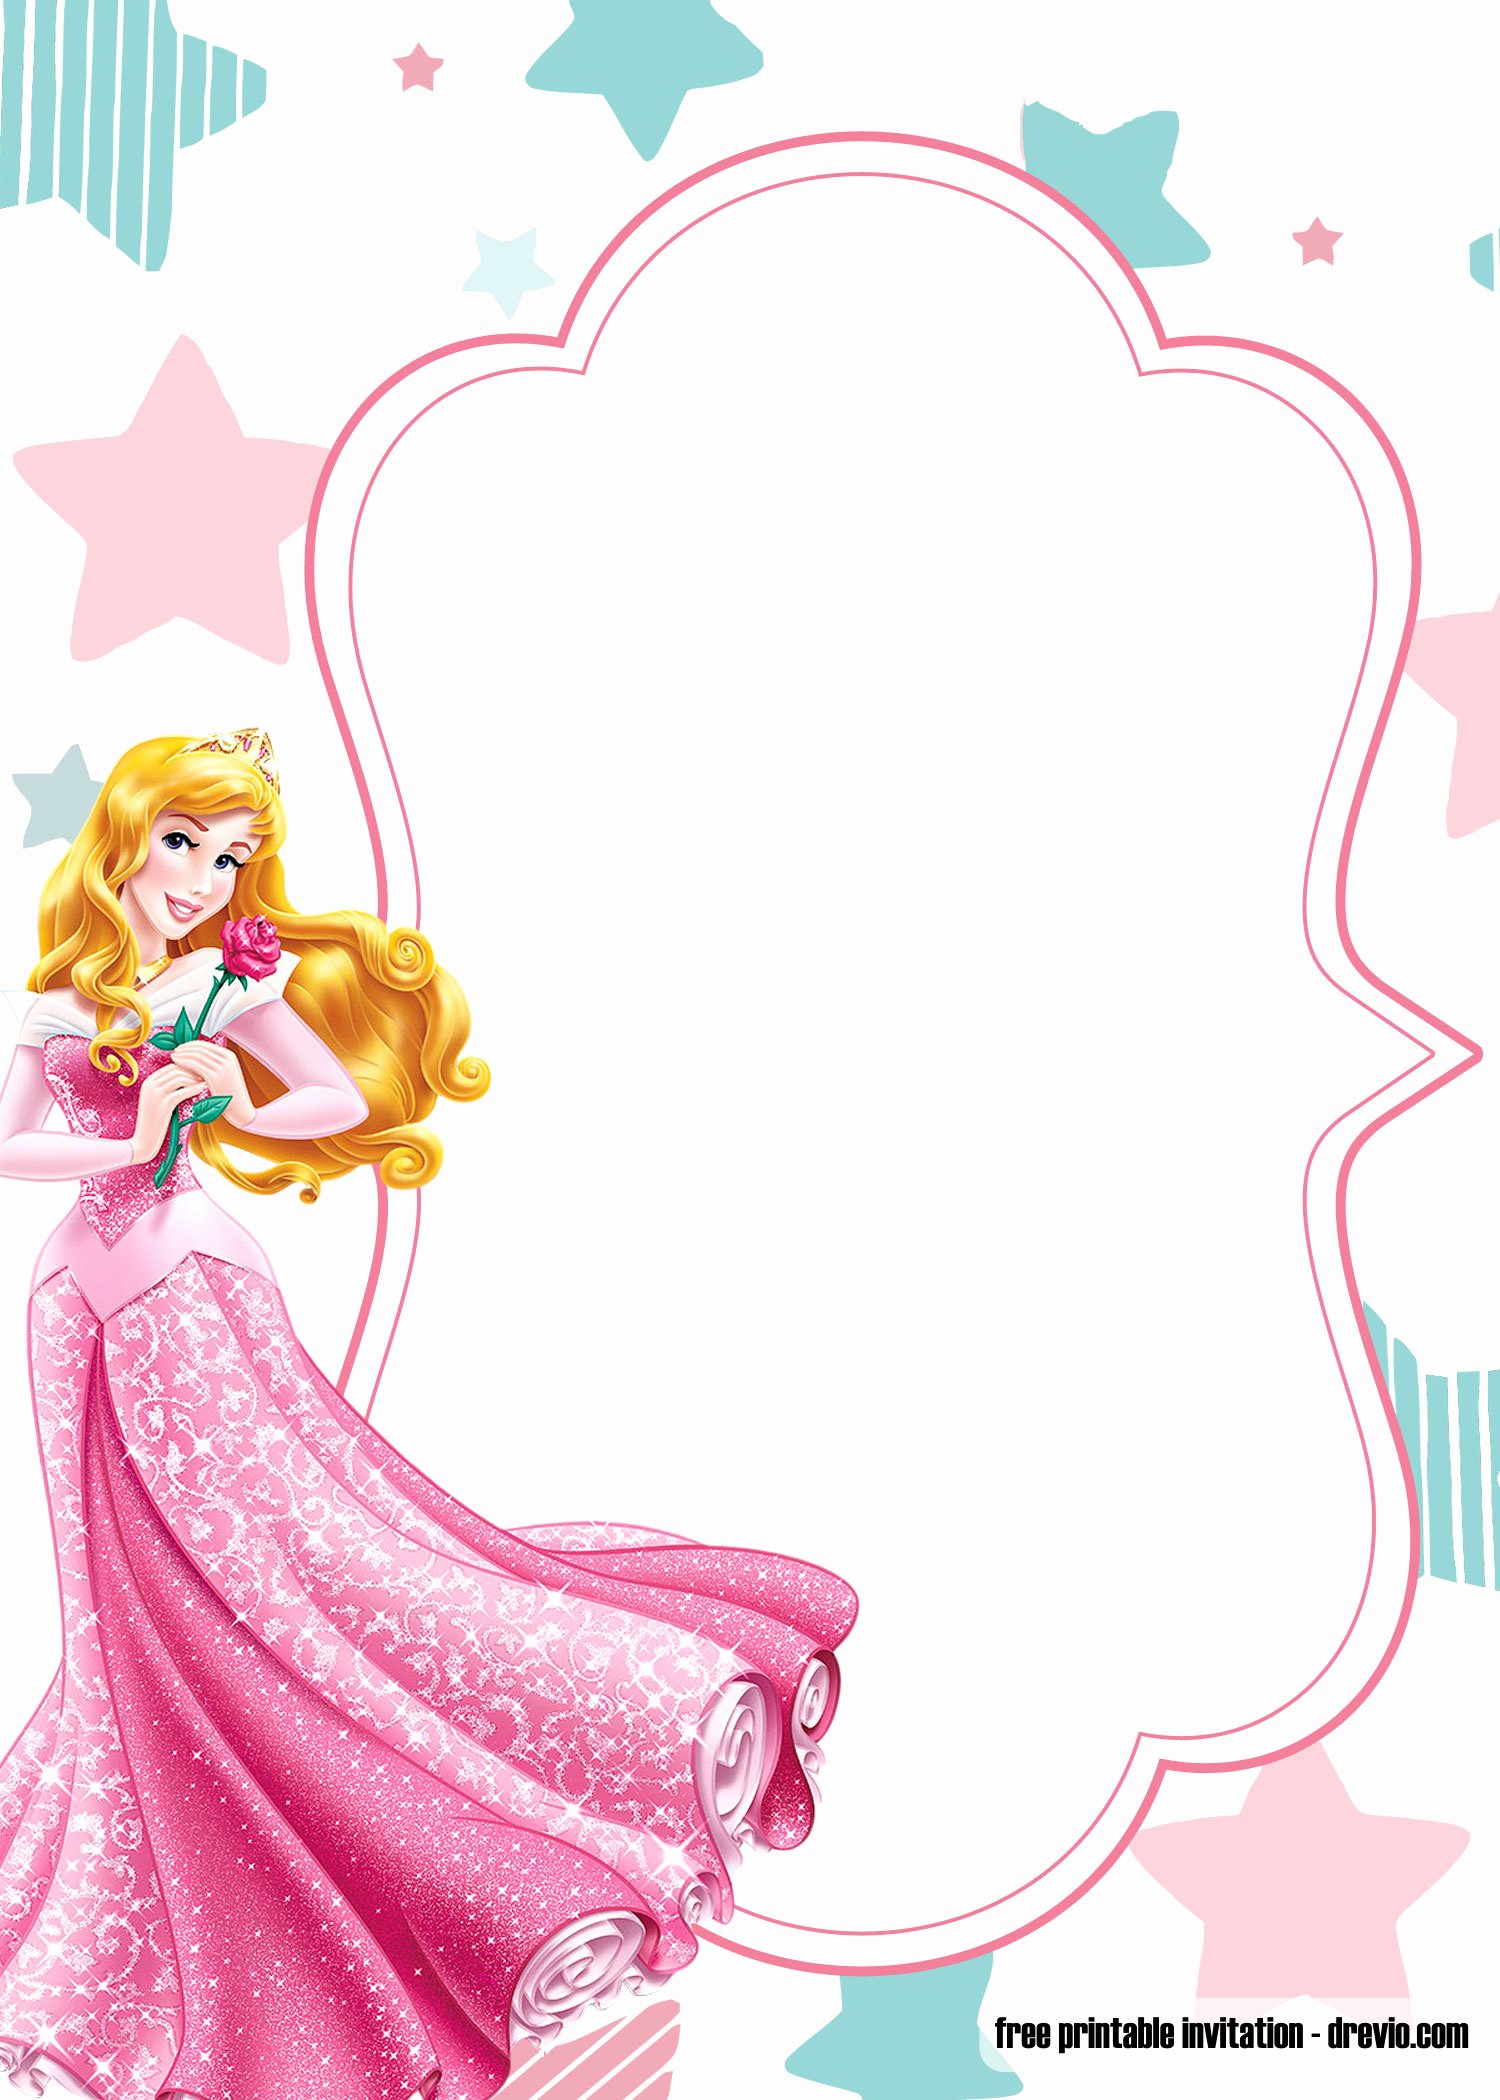 Disney Princess Invitation Templates Free Inspirational Free Printable Princess Birthday Invitation Templates